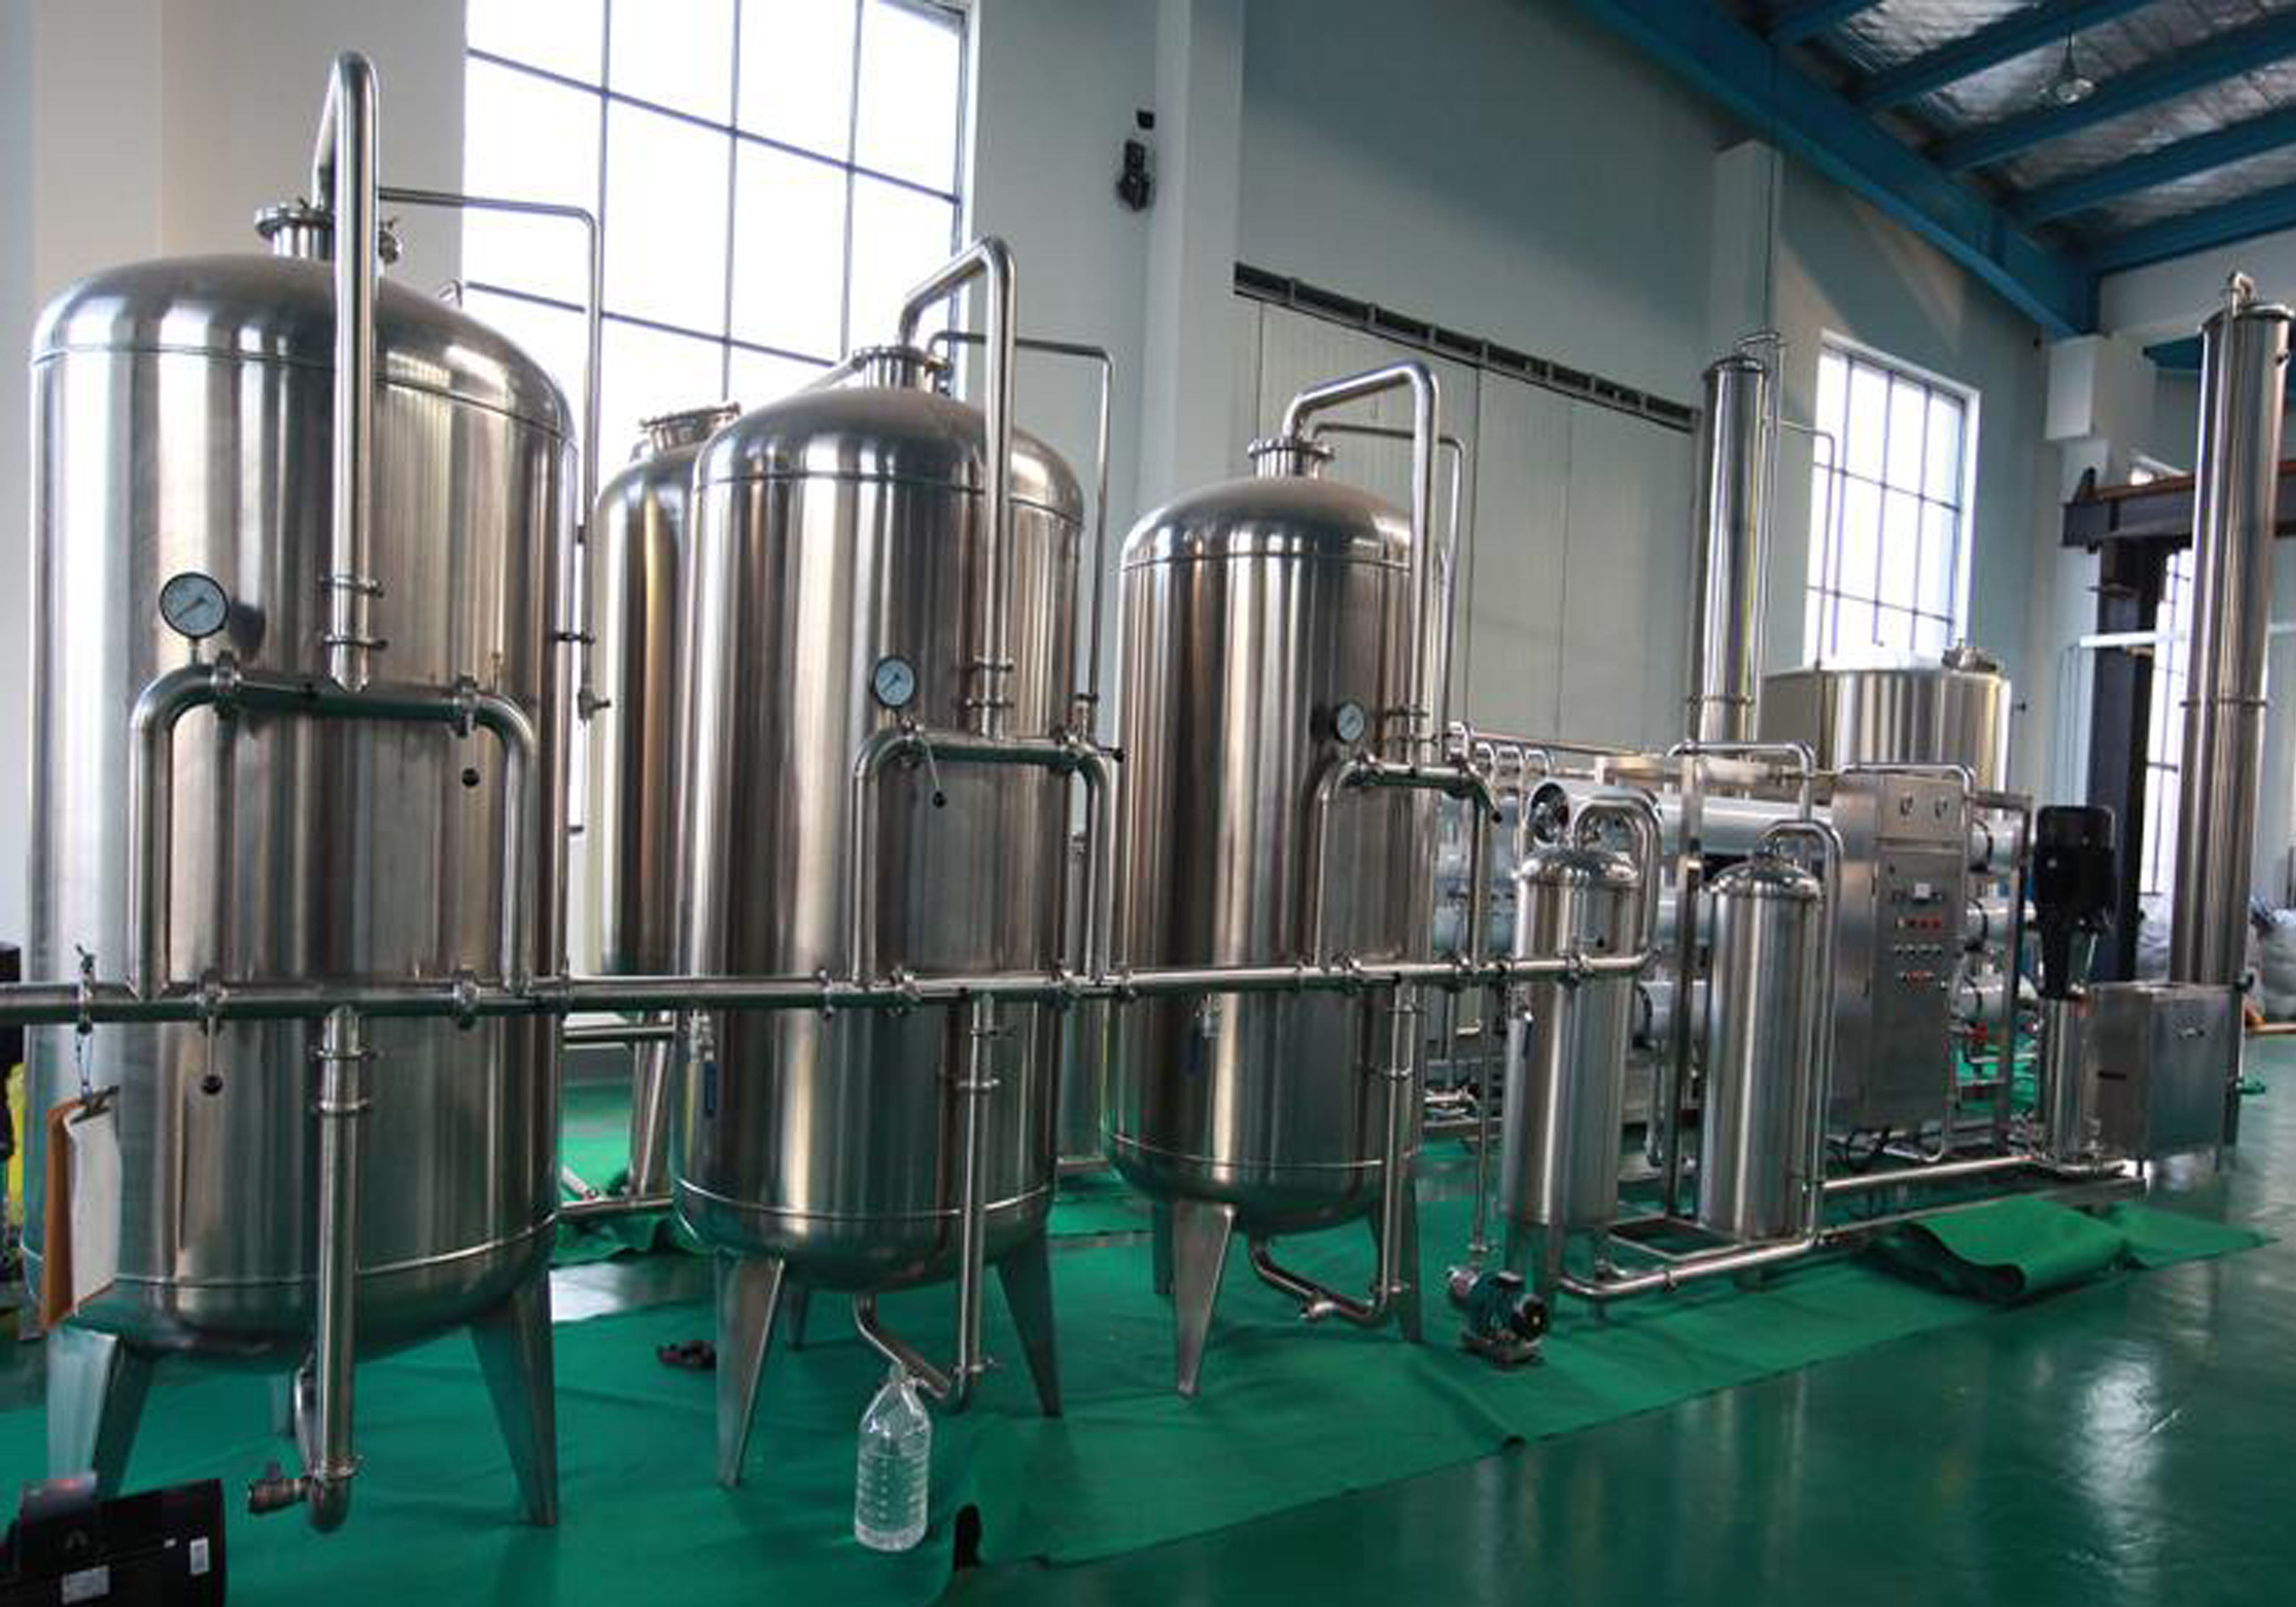 China Long Warranty Liquid Filling Machine RO Water Treatment 1000-8000l / H Capacity wholesale